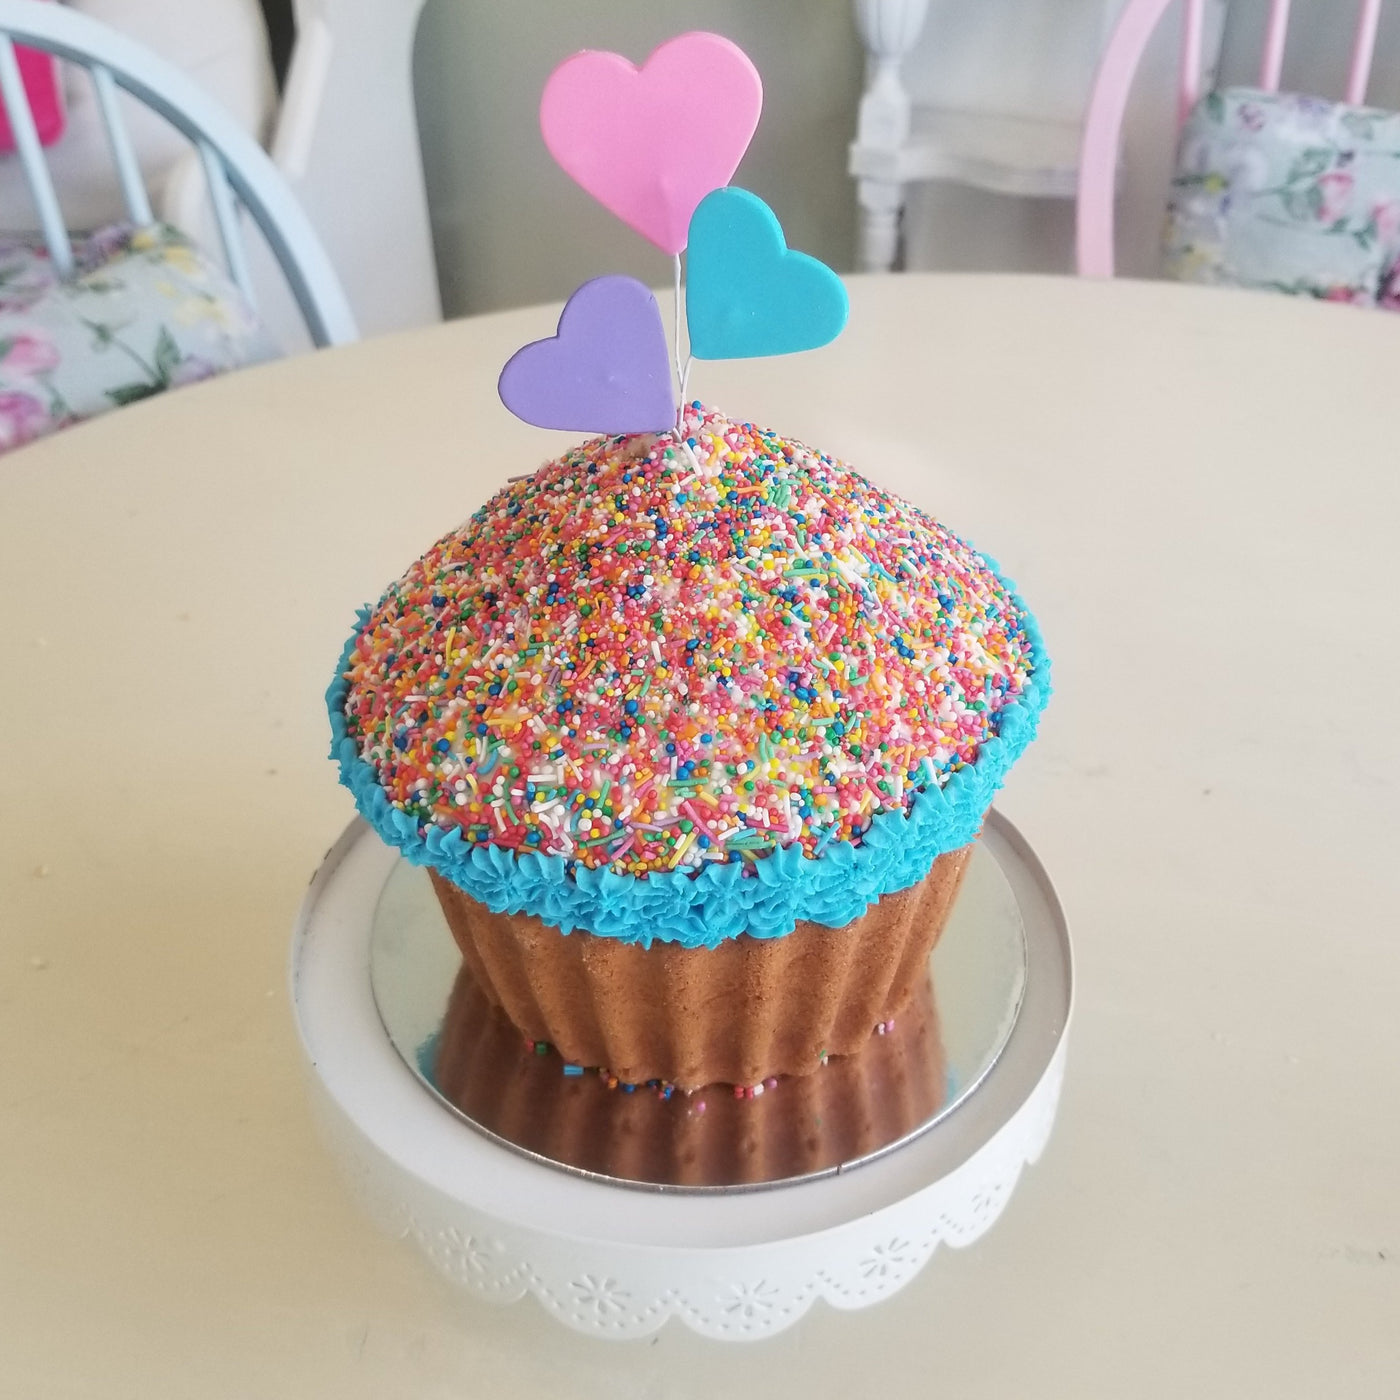 Giant Sprinkle Cupcake - My Little Cupcake